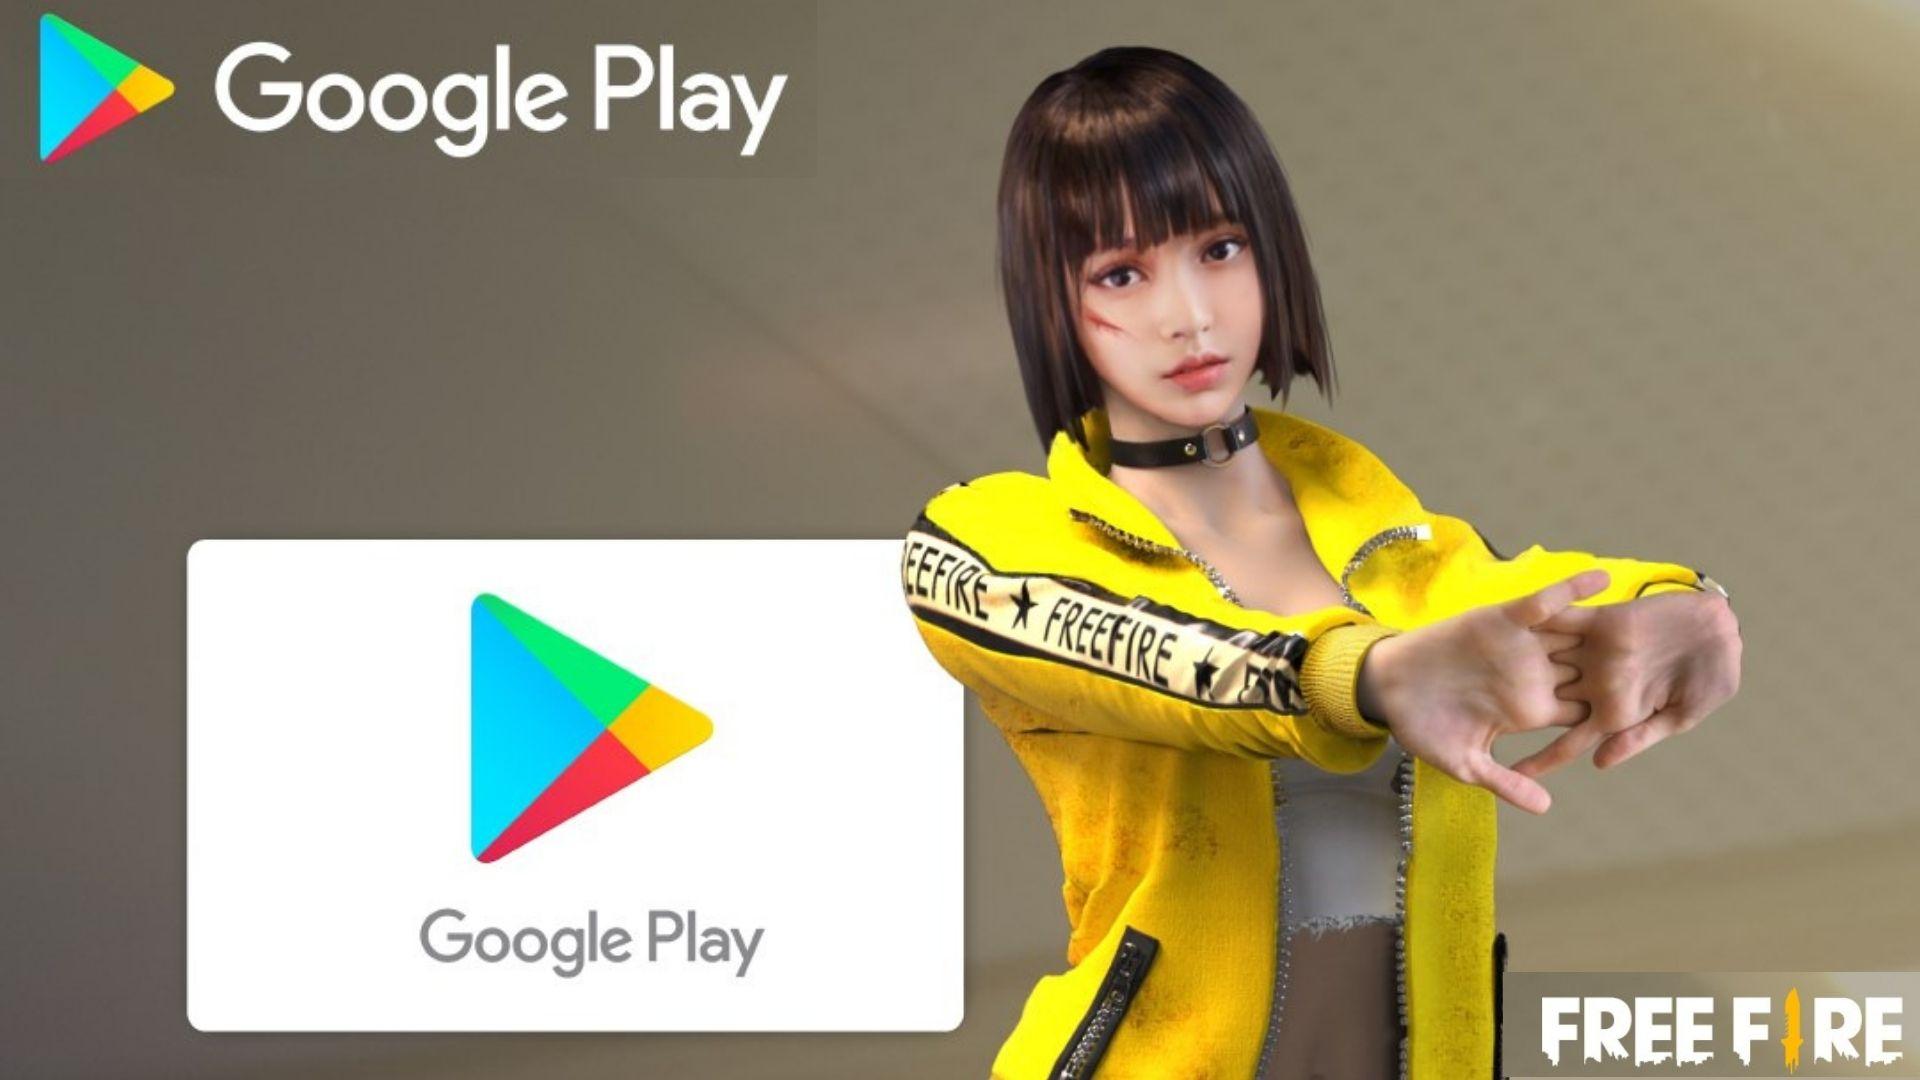 Google Play On Challenge - Free Fire - Aperte o Play 